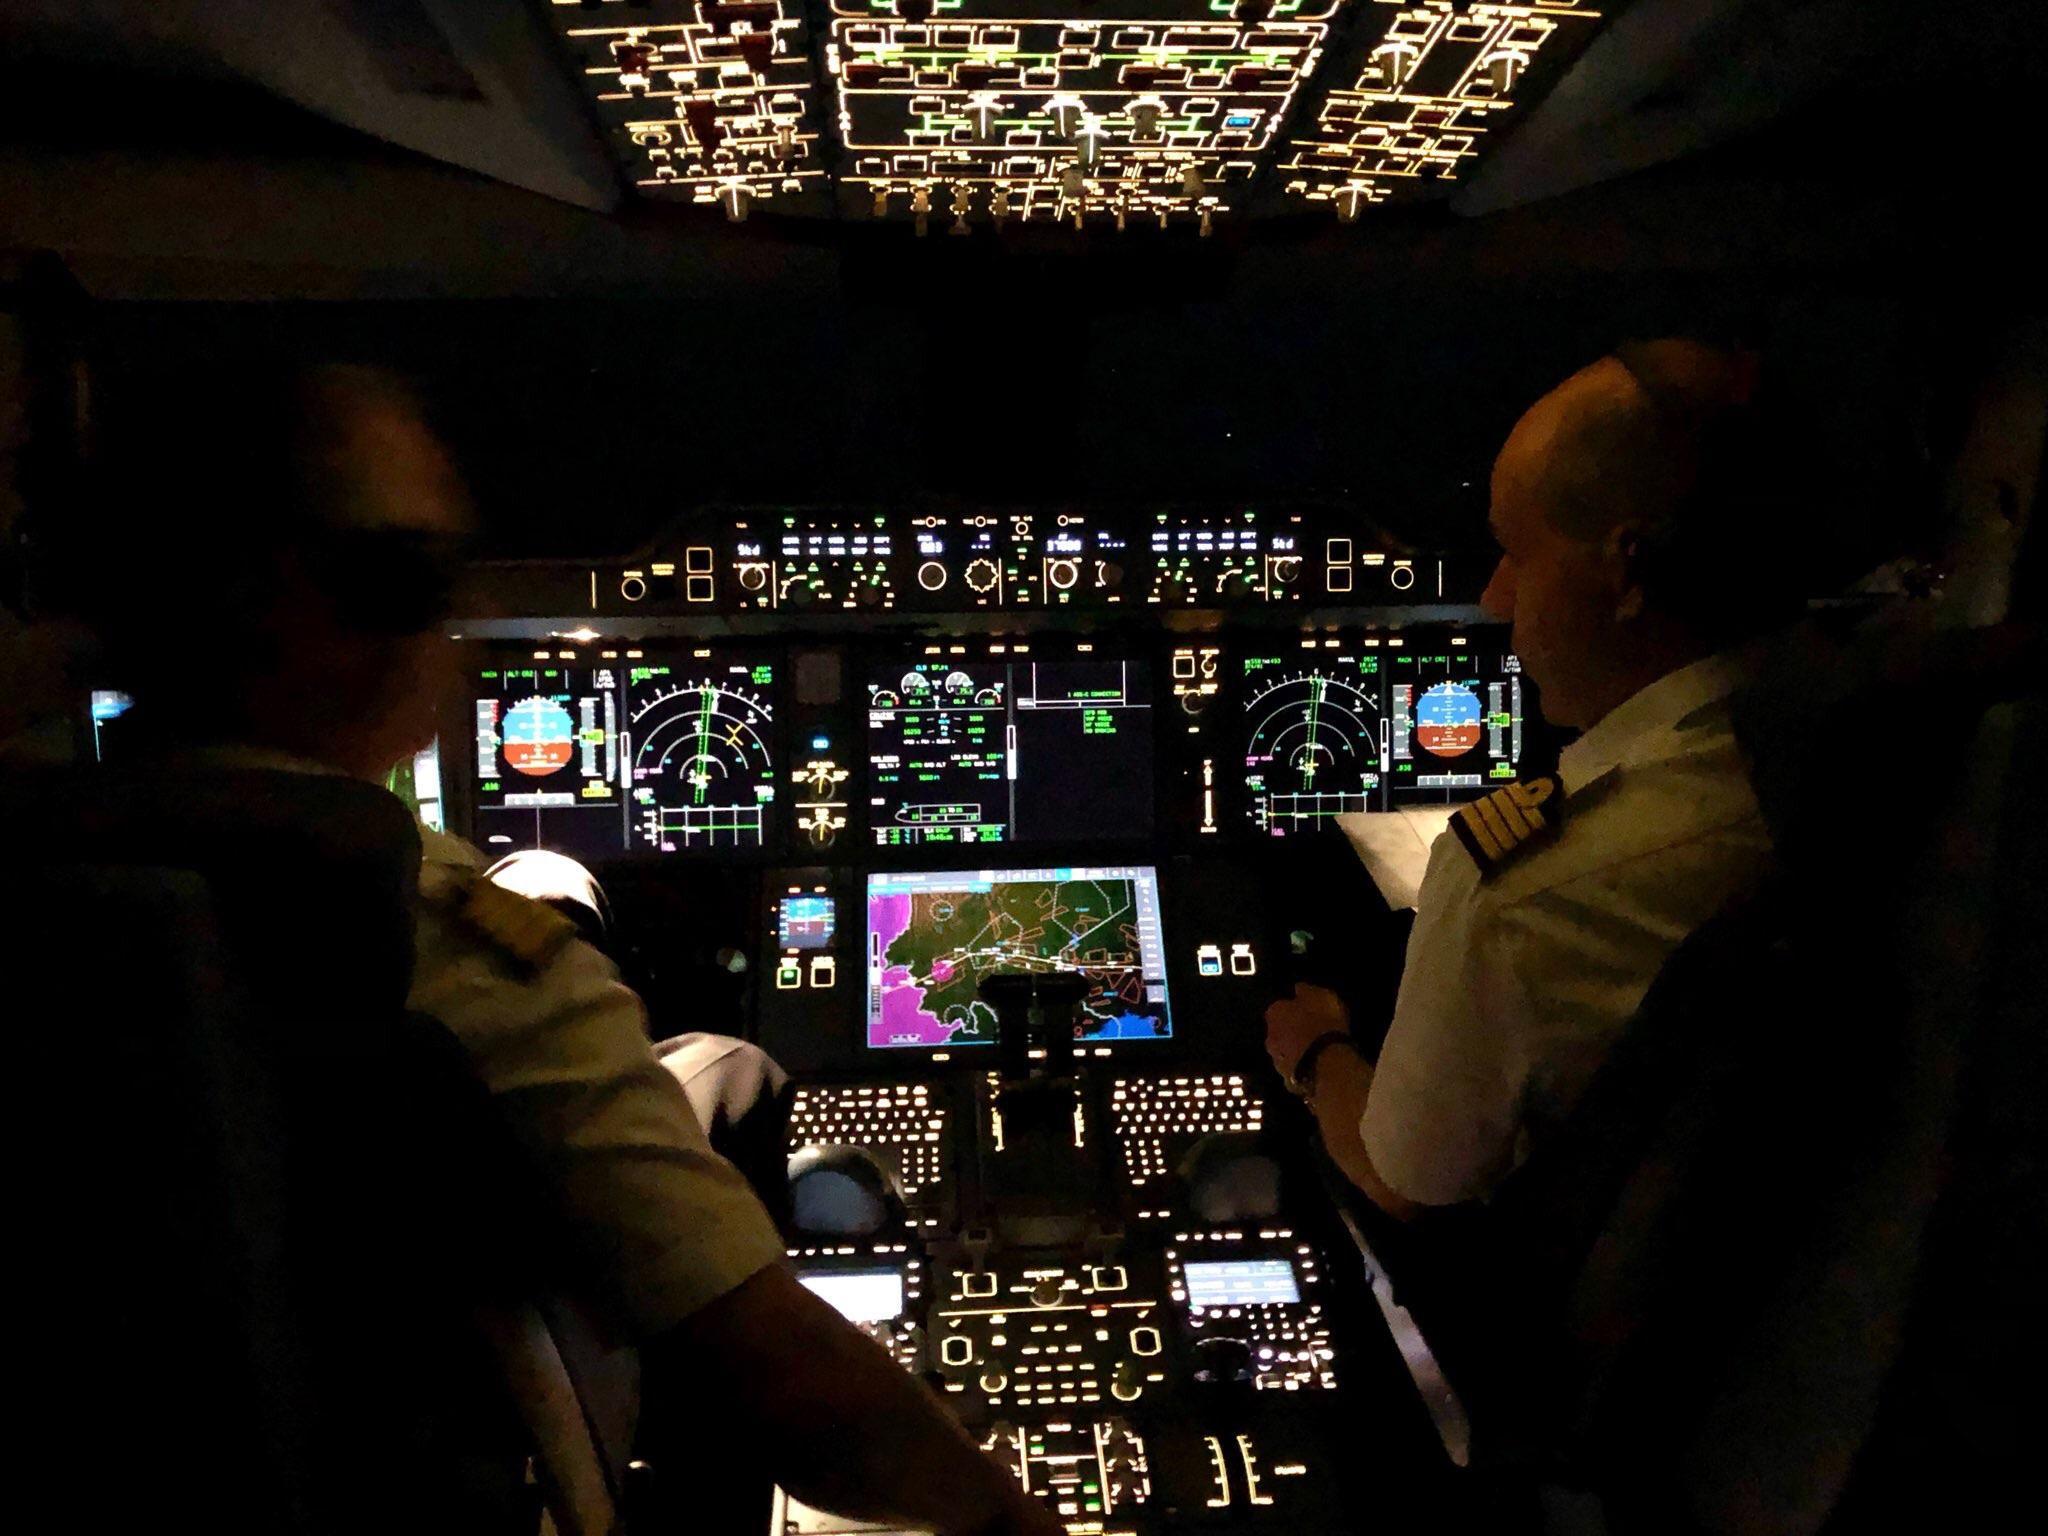 Airbus A350 cockpit looks amazing